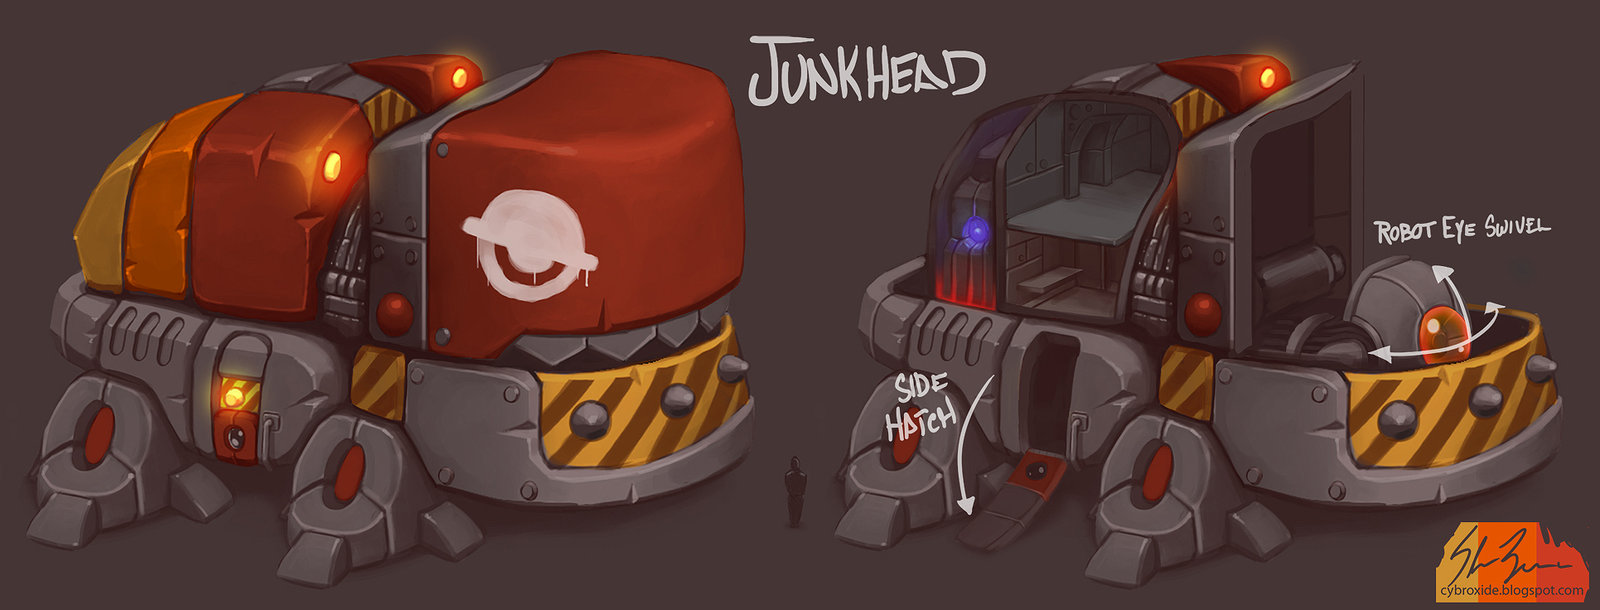 The Junk Head